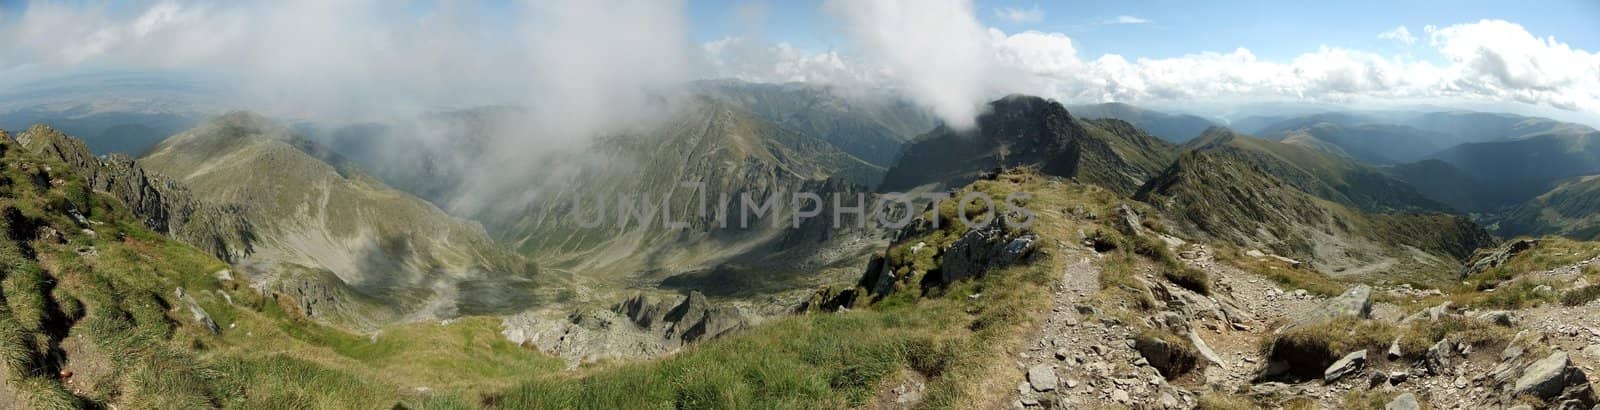 The carpathians in Transylvania by renegadewanderer